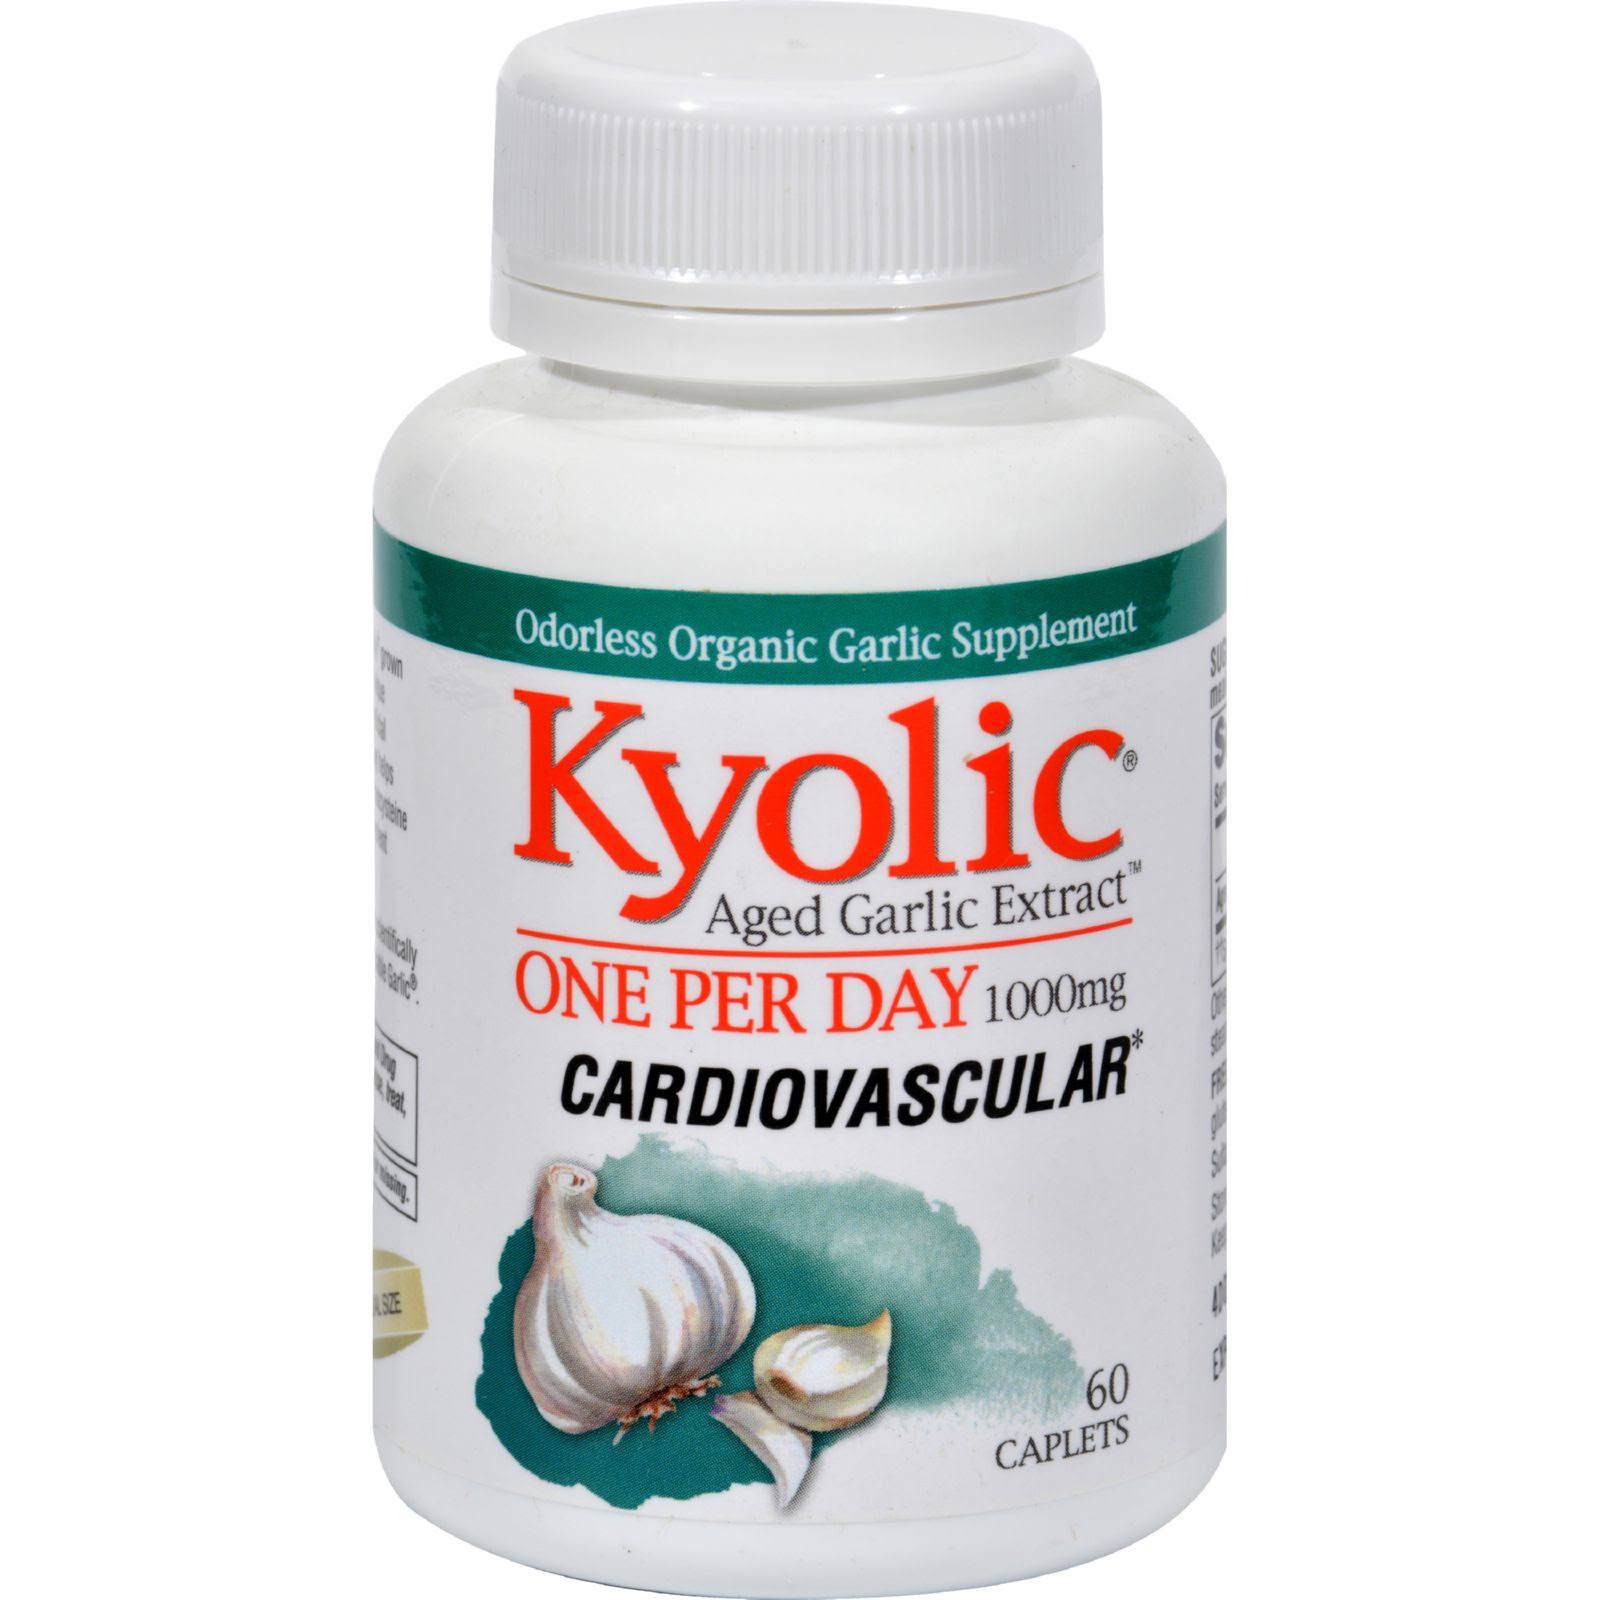 Kyolic - Aged Garlic Extract One per Day Cardiovascular - 1000 mg - 30